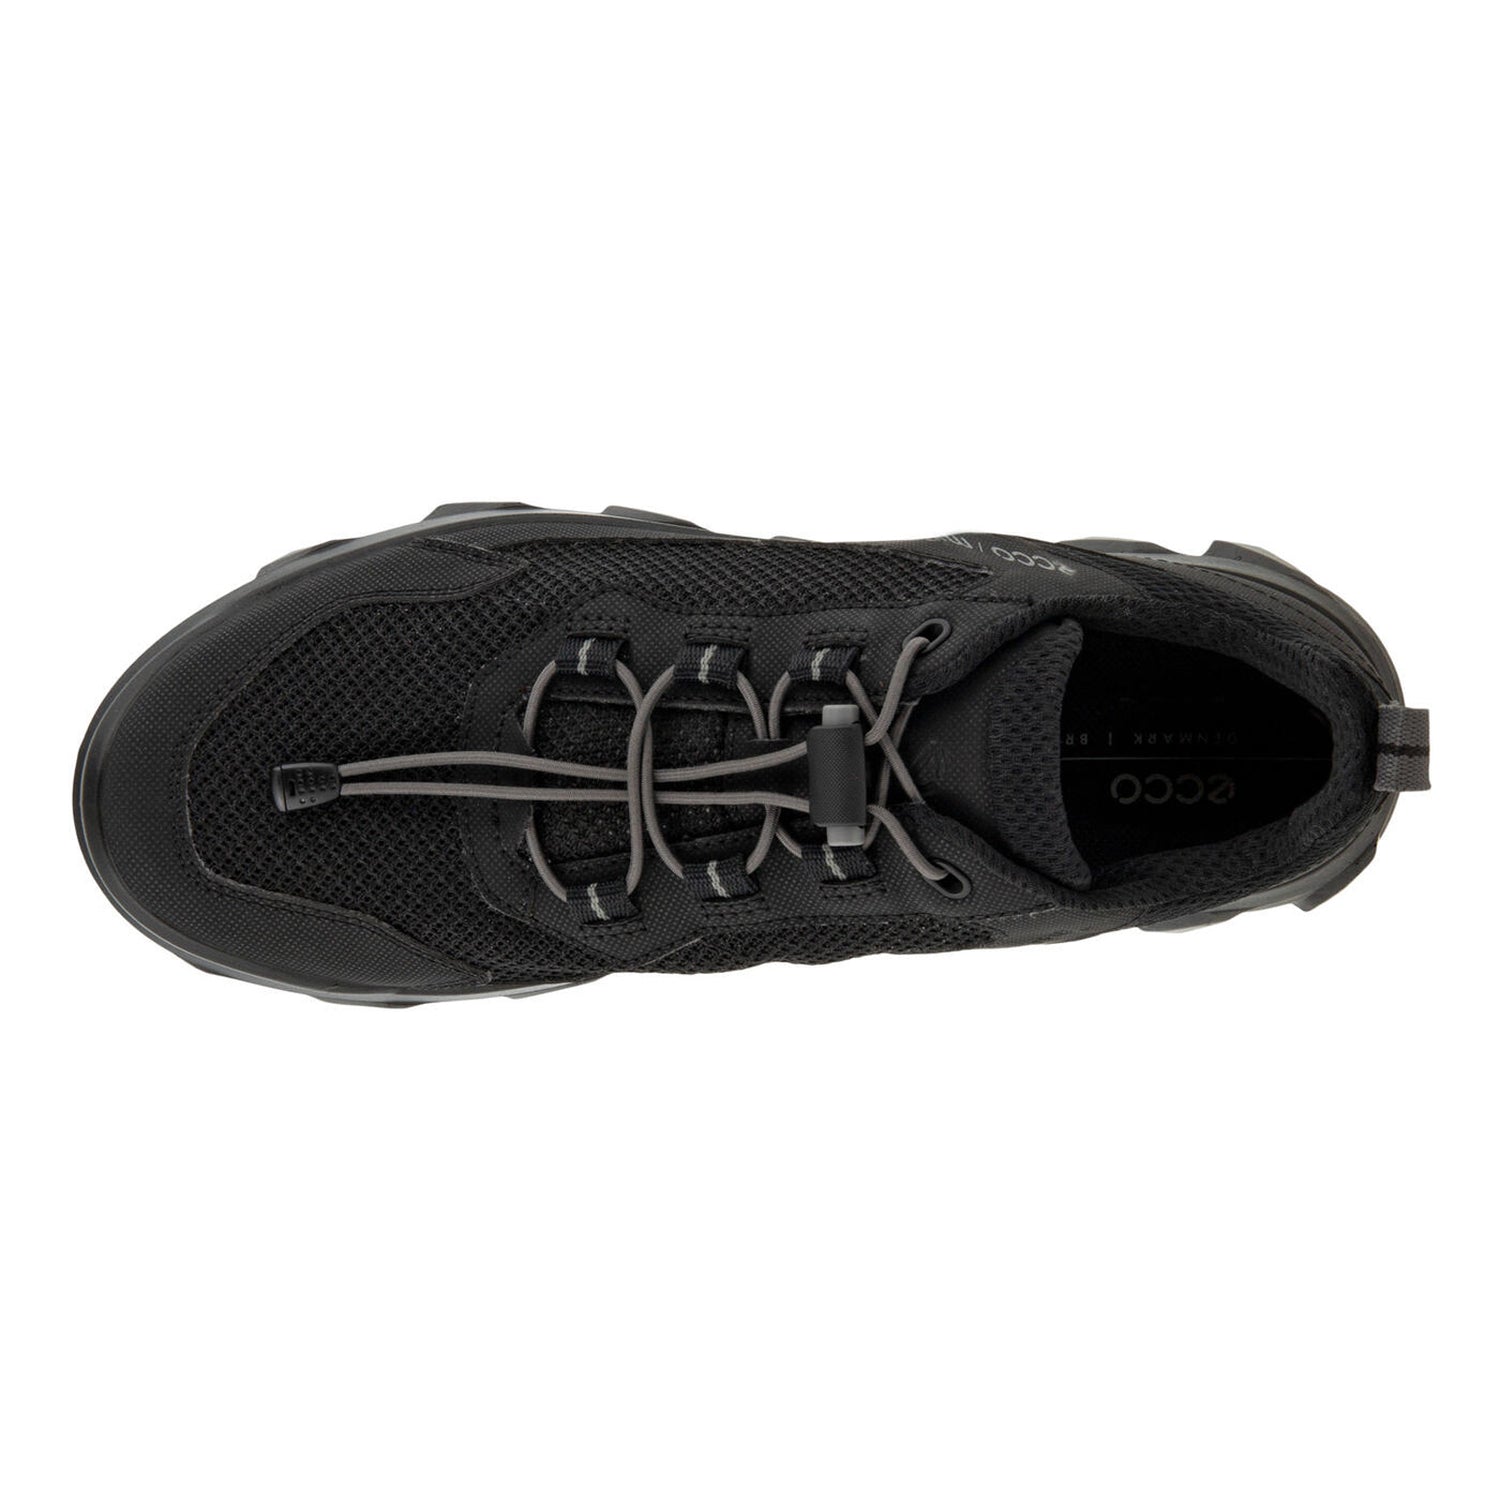 Peltz Shoes  Women's Ecco MX Breathru Hiking Shoe Black/Black 820263-51052